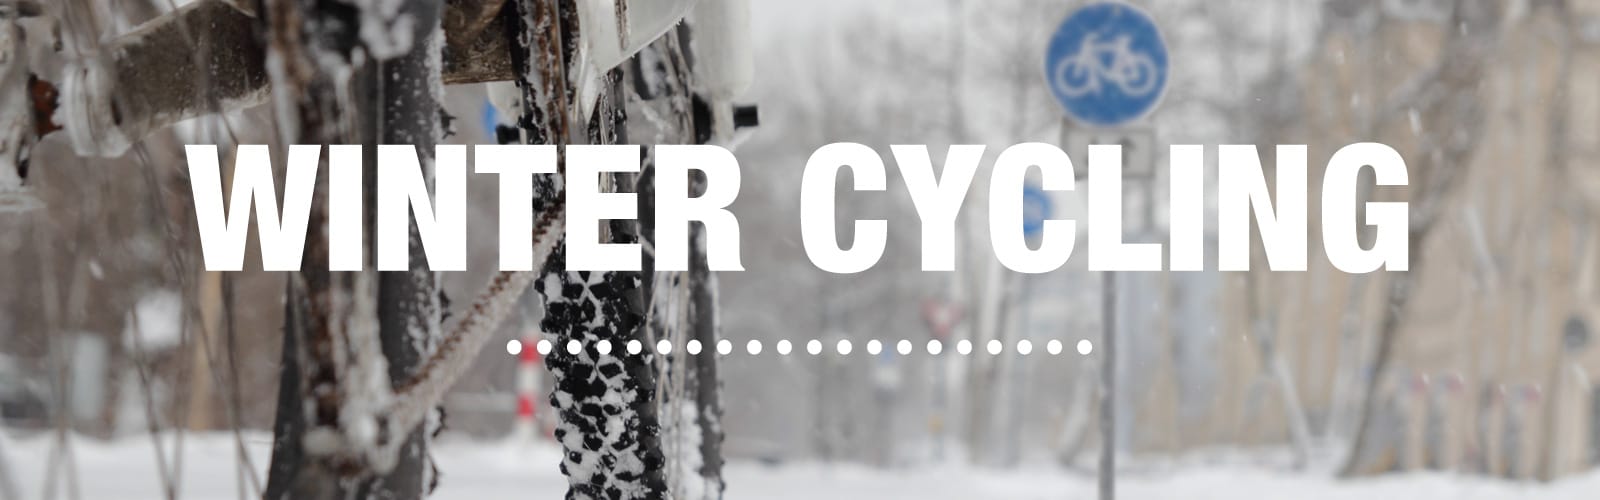 Winter Cycling Guide